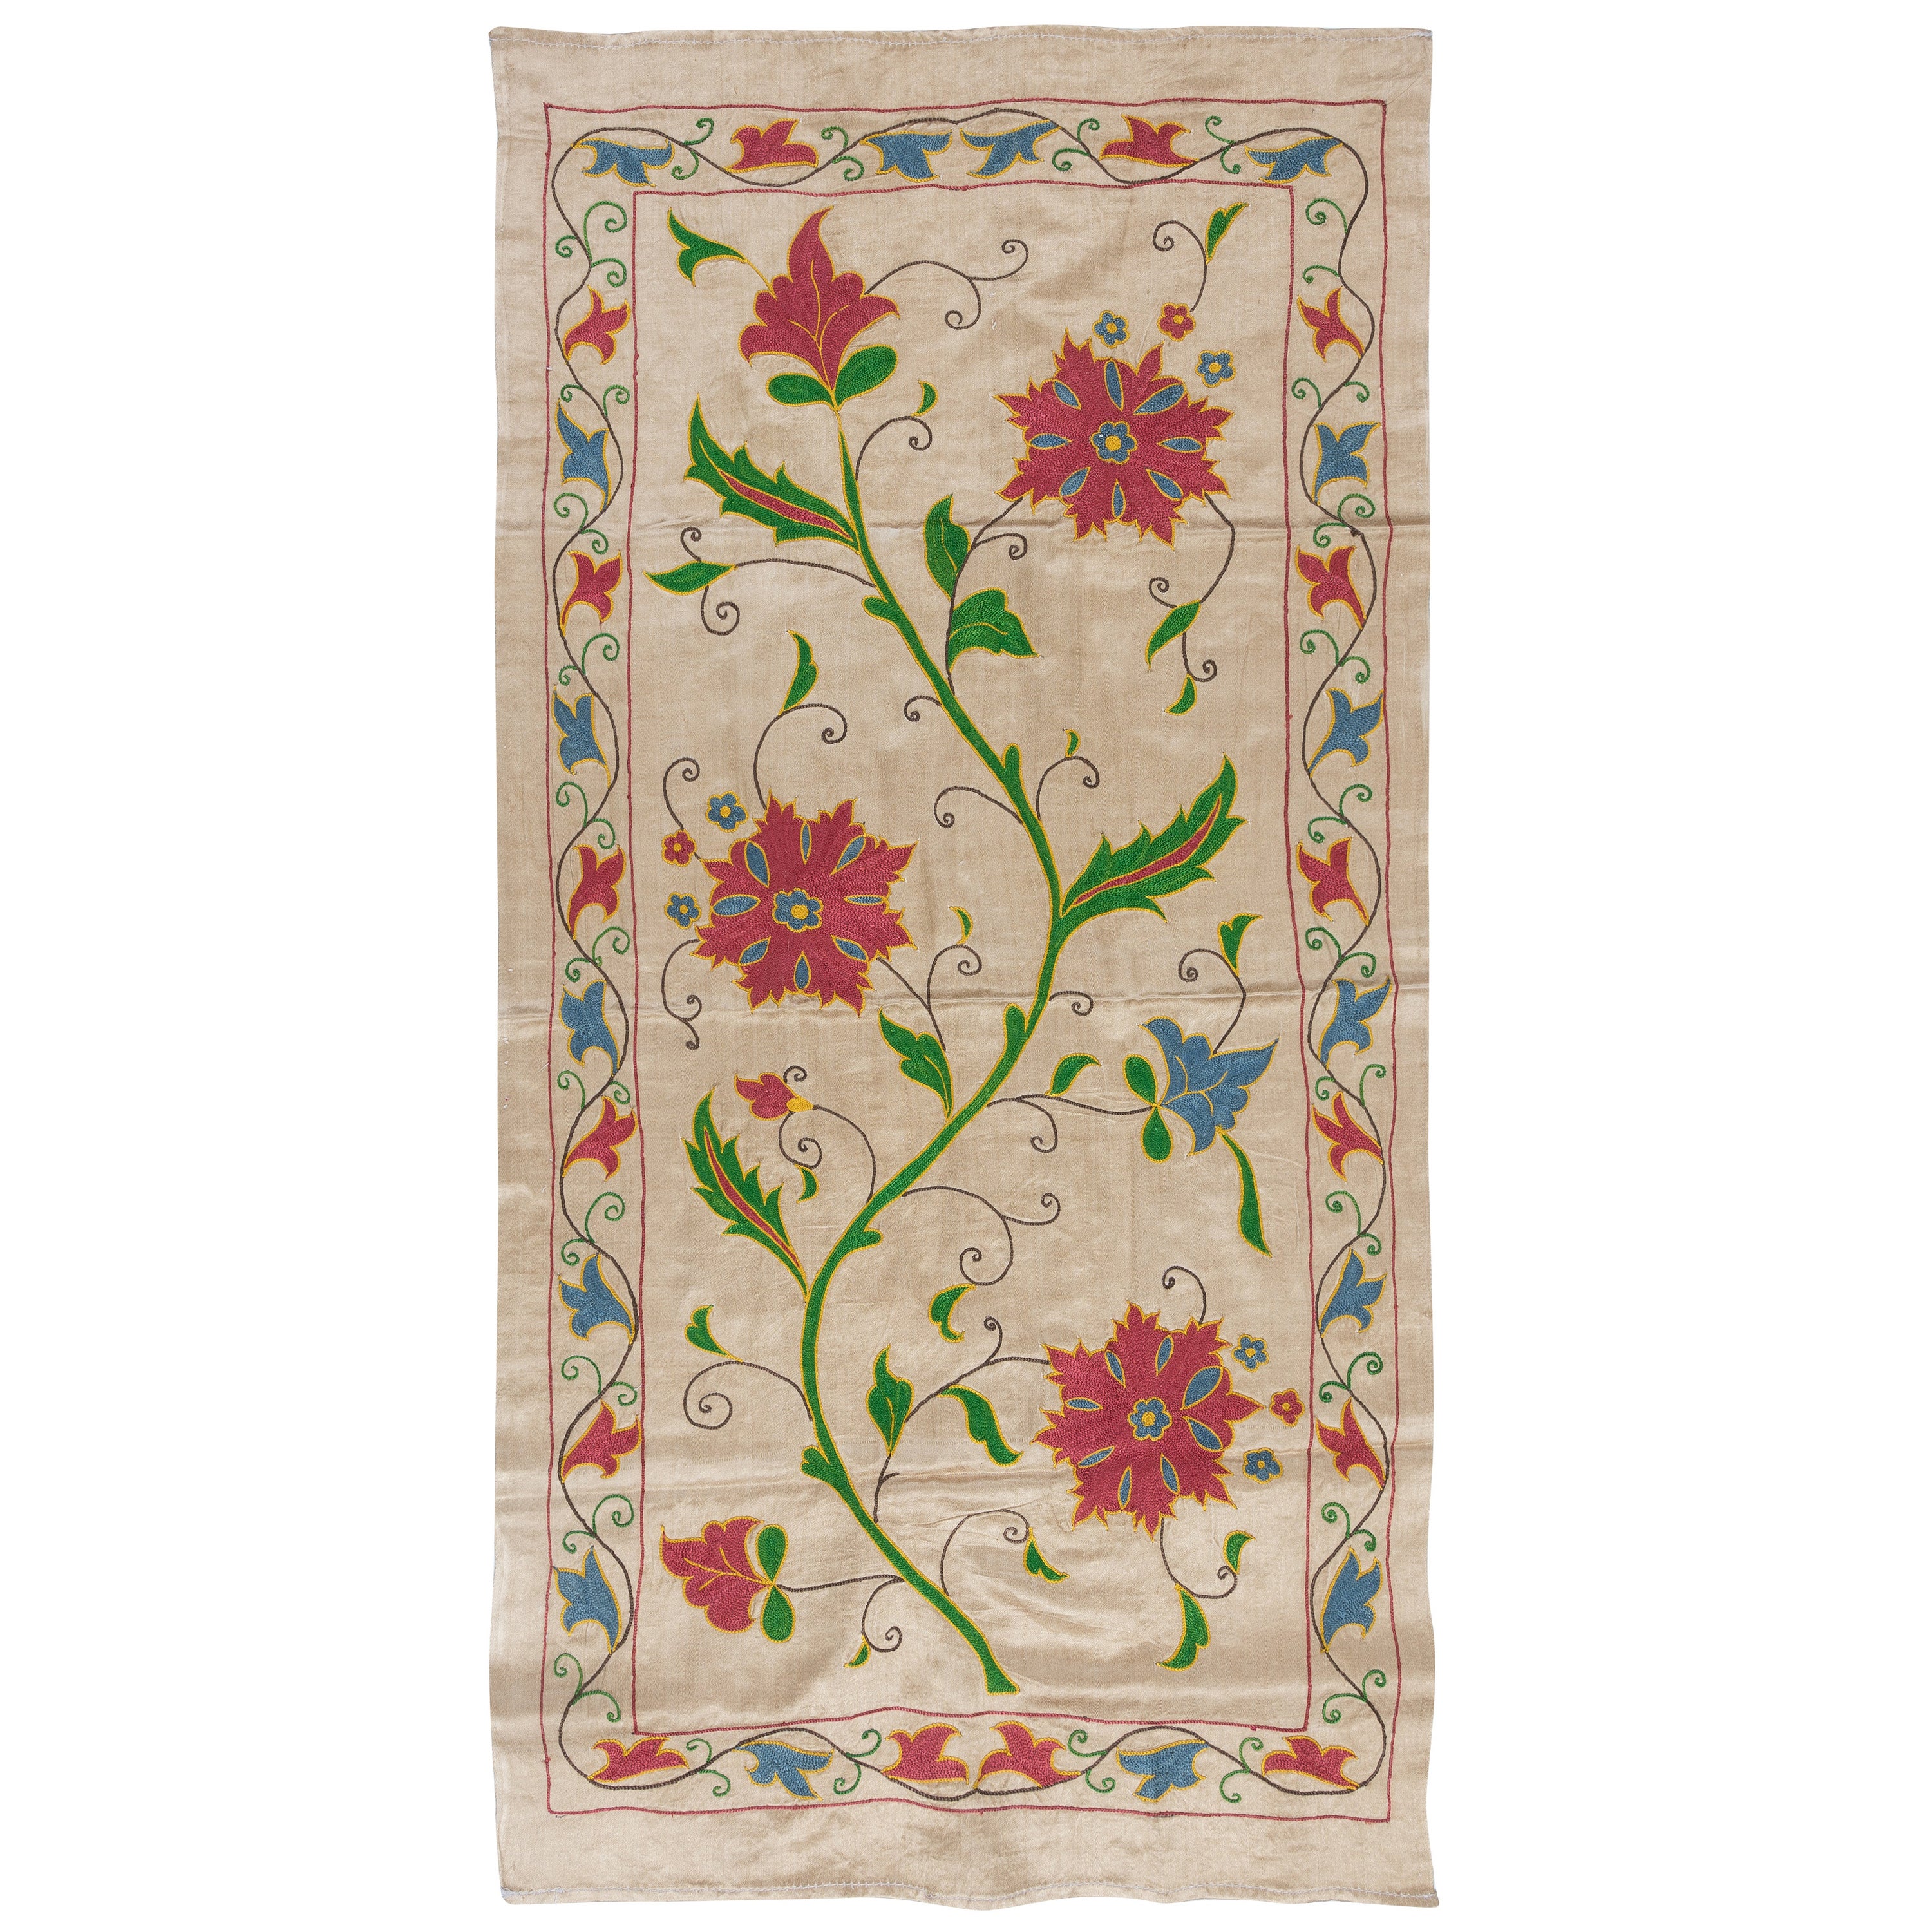 21"x41" Embroidered 100% Silk Wall Hanging, Suzani Wall Art, Uzbek Tapestry